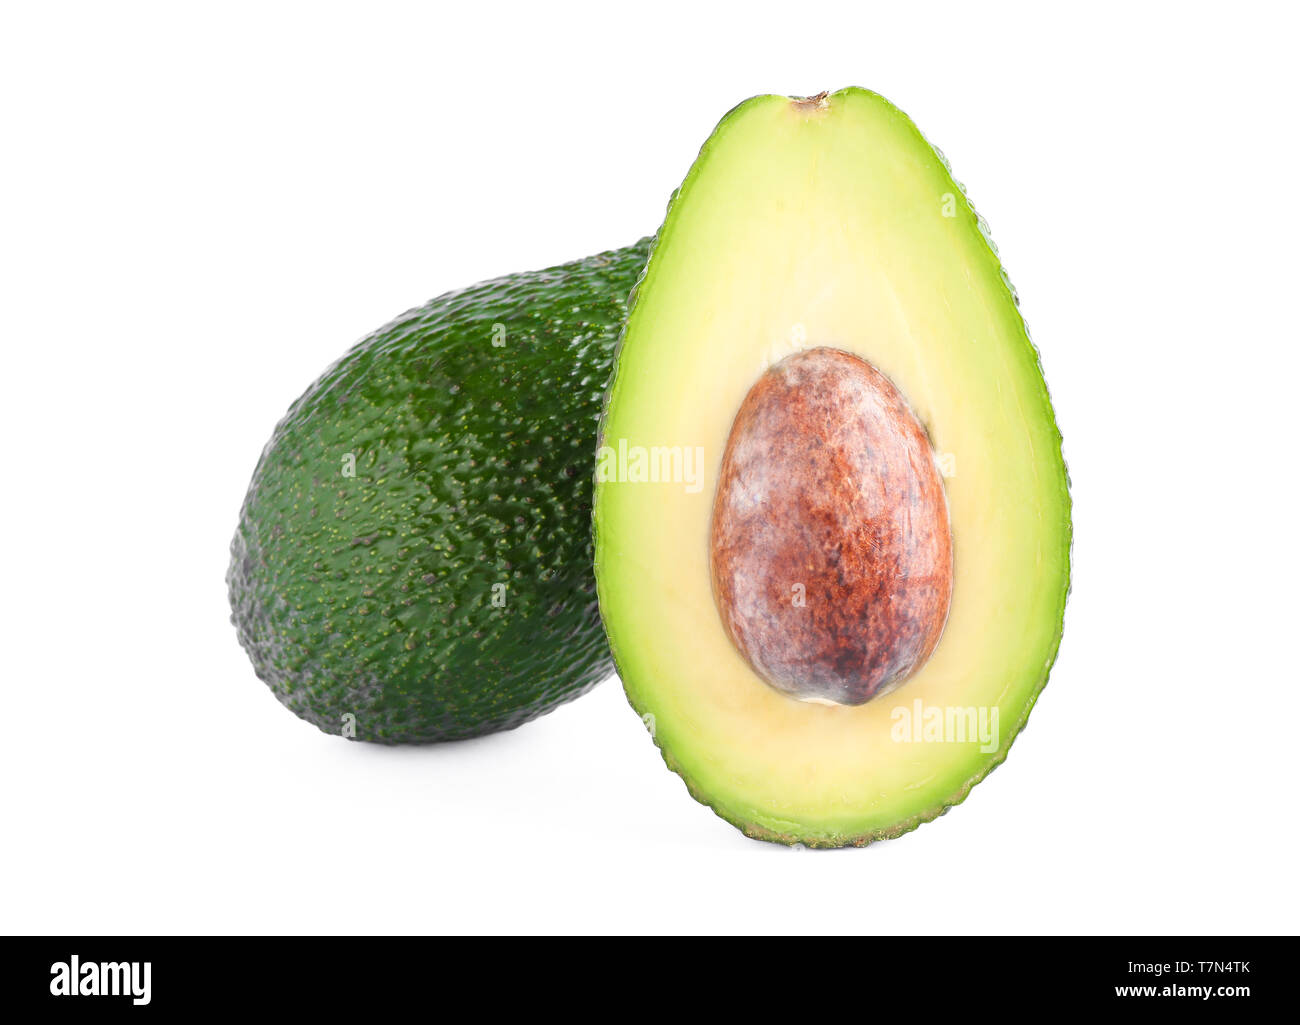 https://c8.alamy.com/comp/T7N4TK/ripe-avocados-isolated-on-white-background-vegetarian-food-T7N4TK.jpg